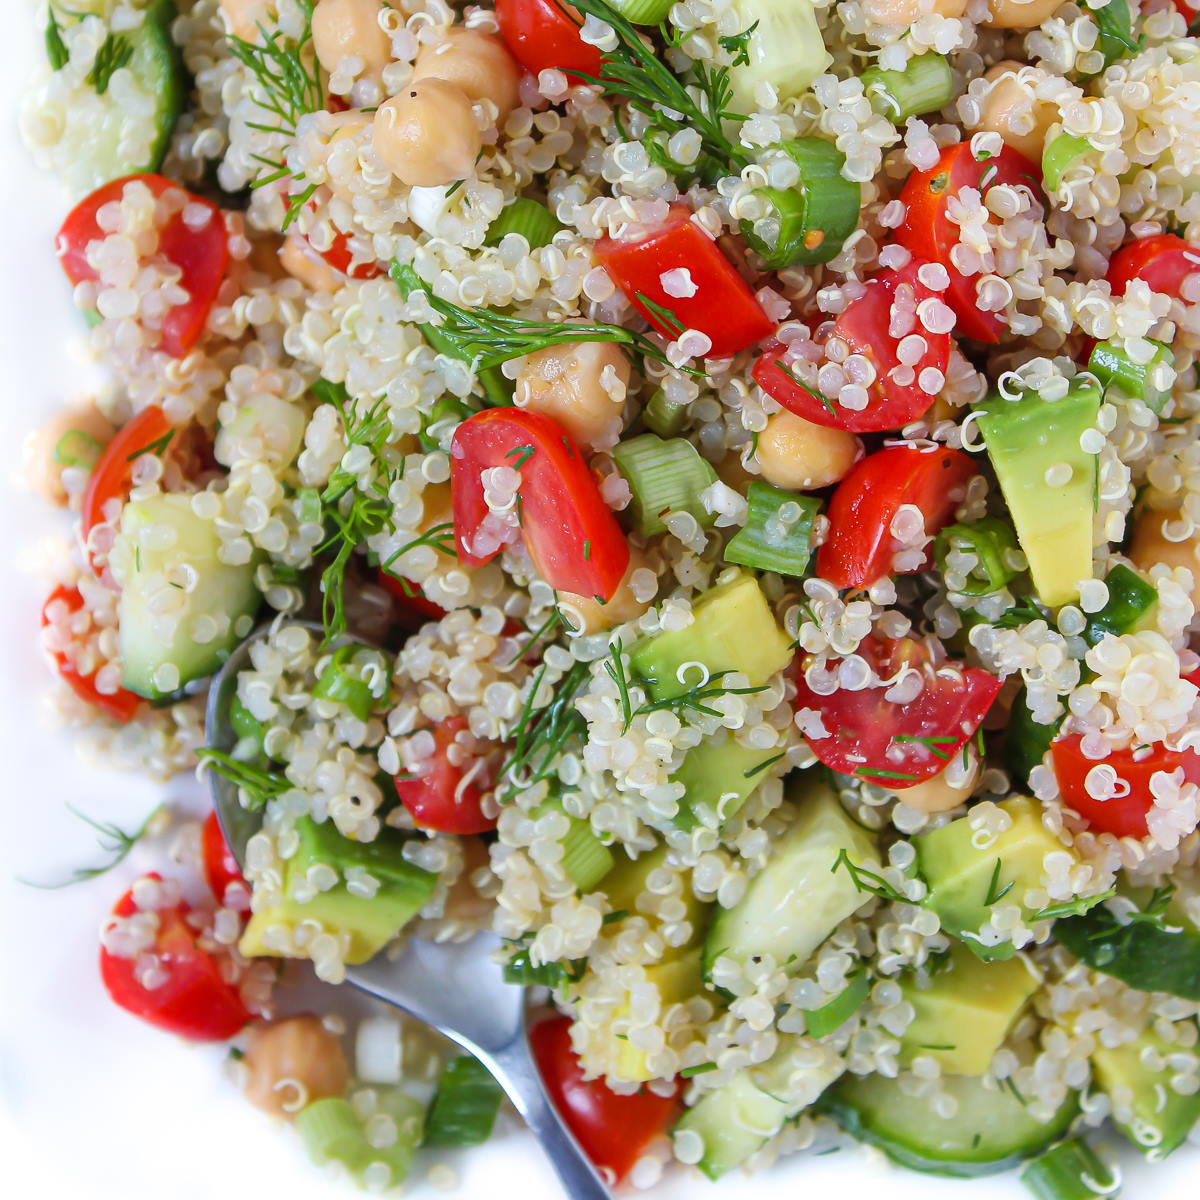 Summer Quinoa Salad Jars with Lemon Dill Dressing Recipe - Pinch of Yum